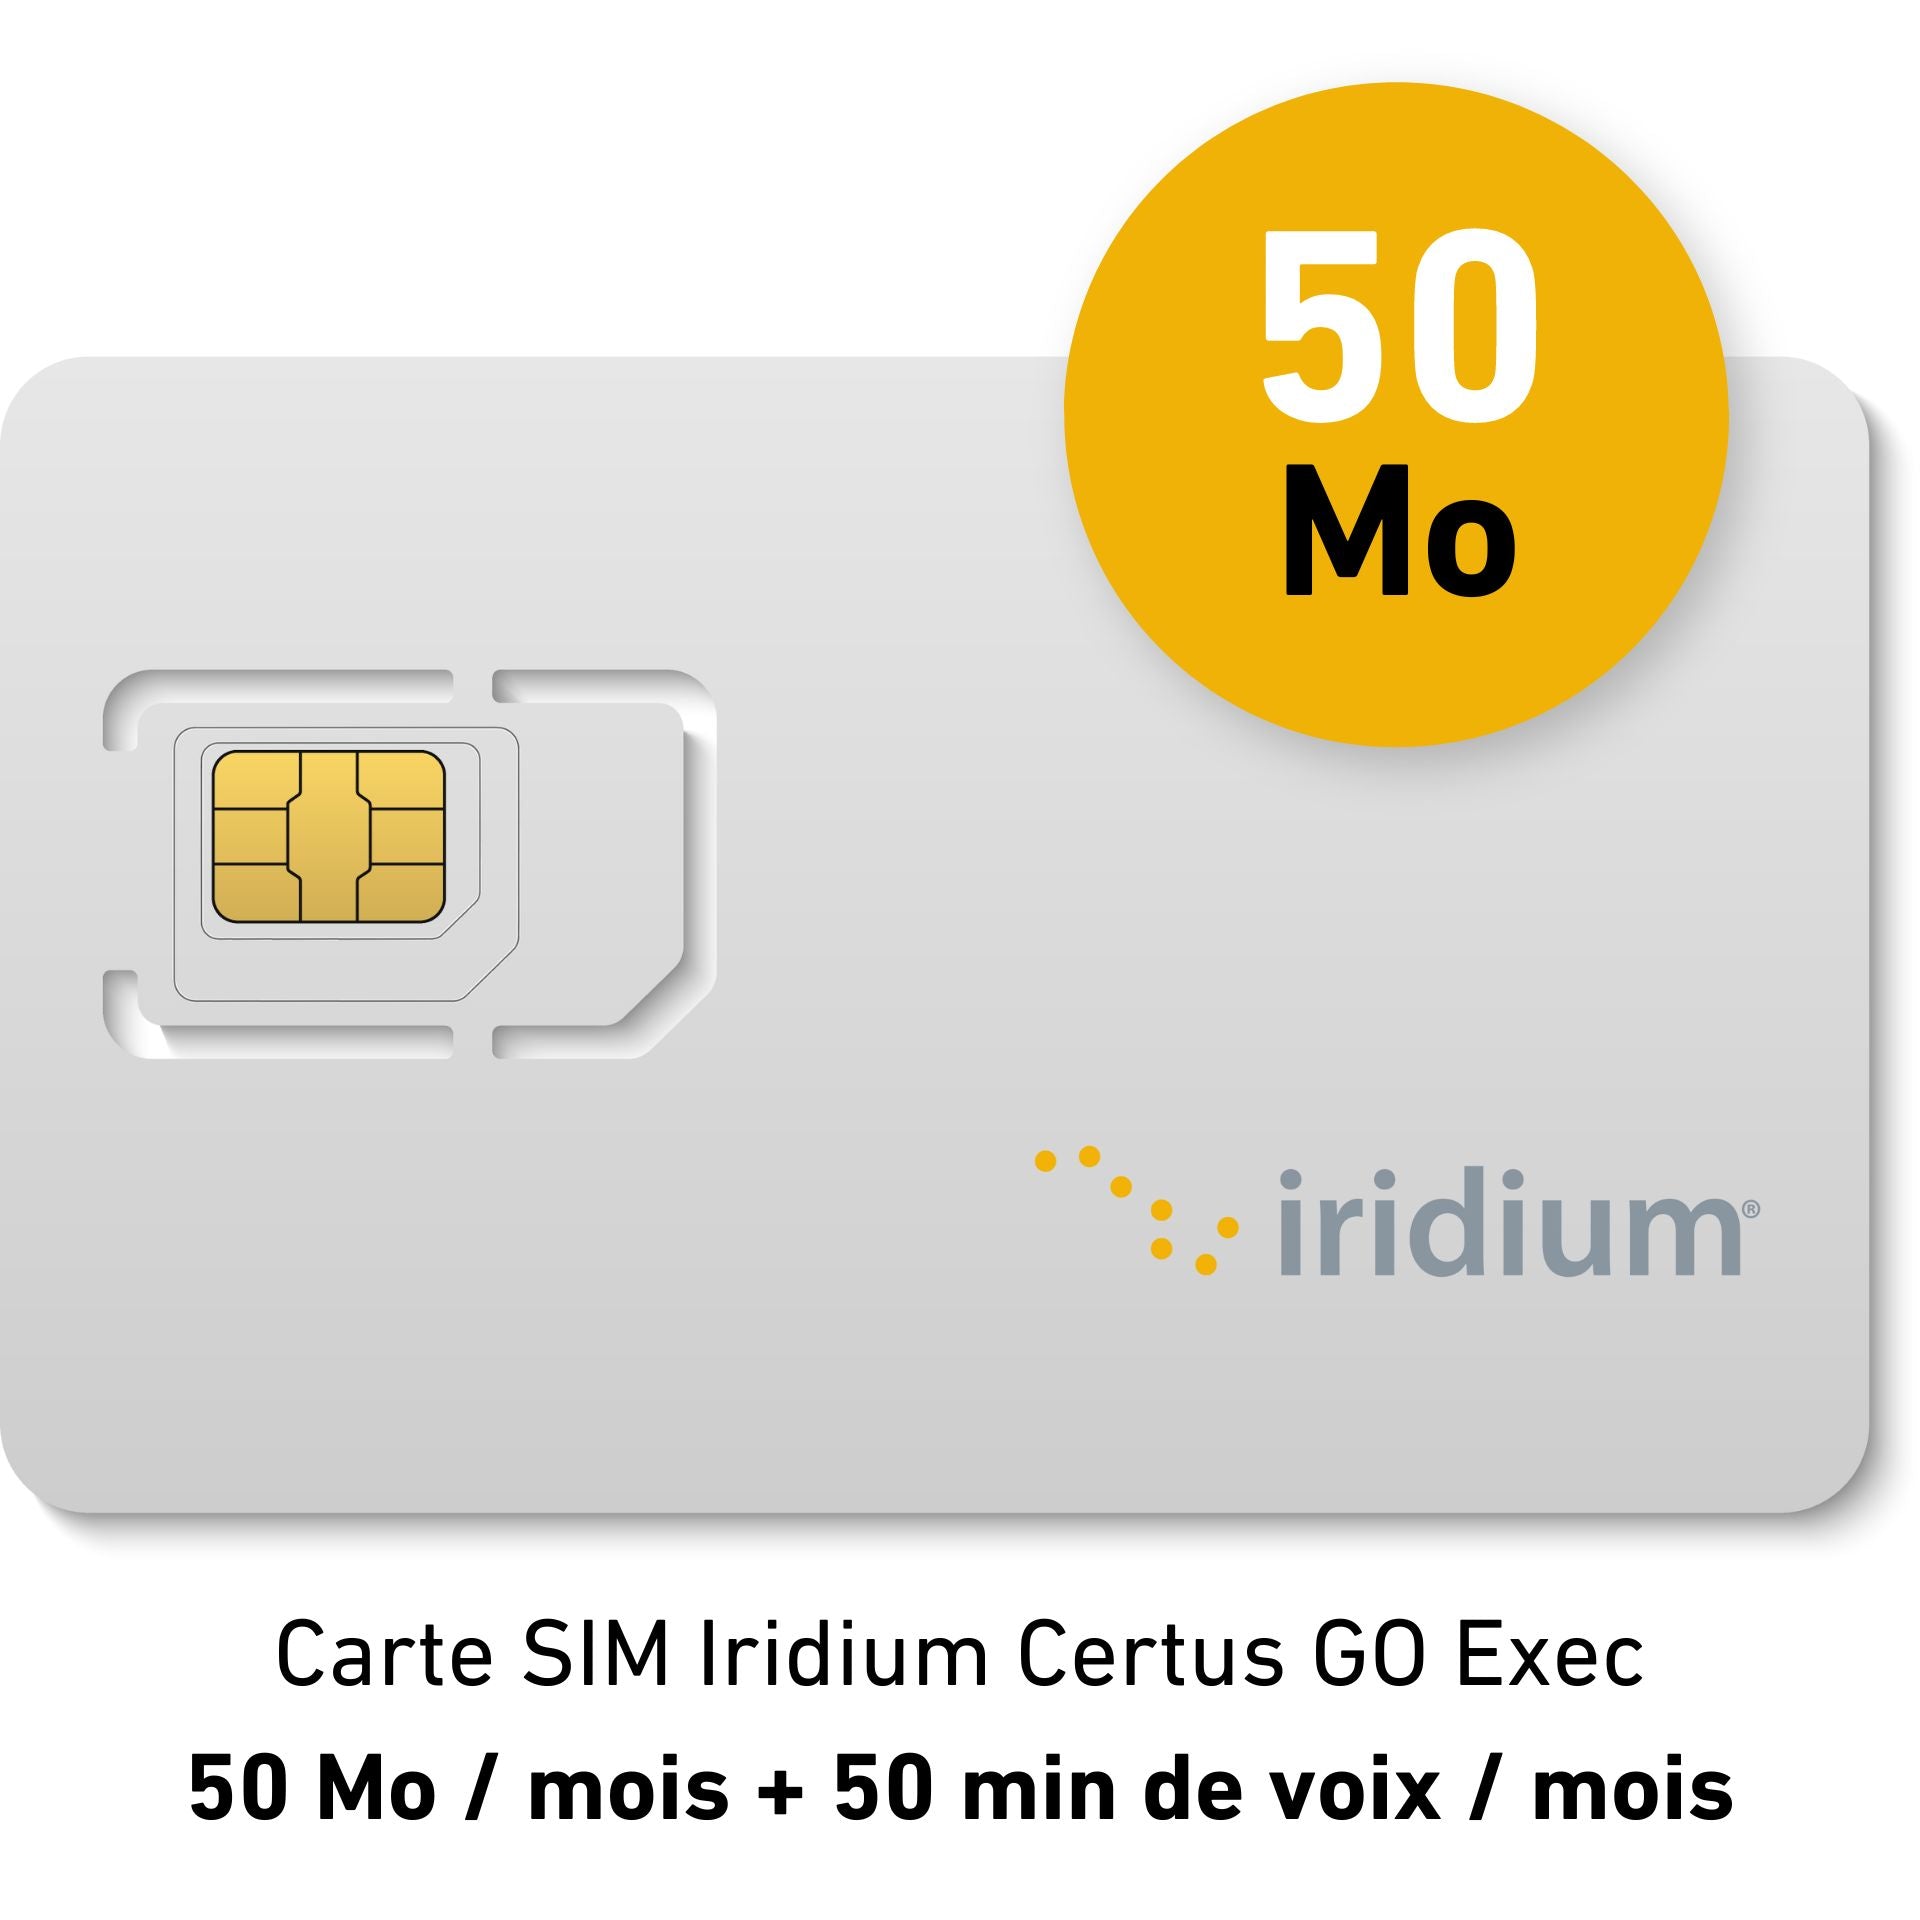 Iridium Certus GO Exec Monthly Pleasure Subscription - 50MB/month - doubled data + 50 min voice